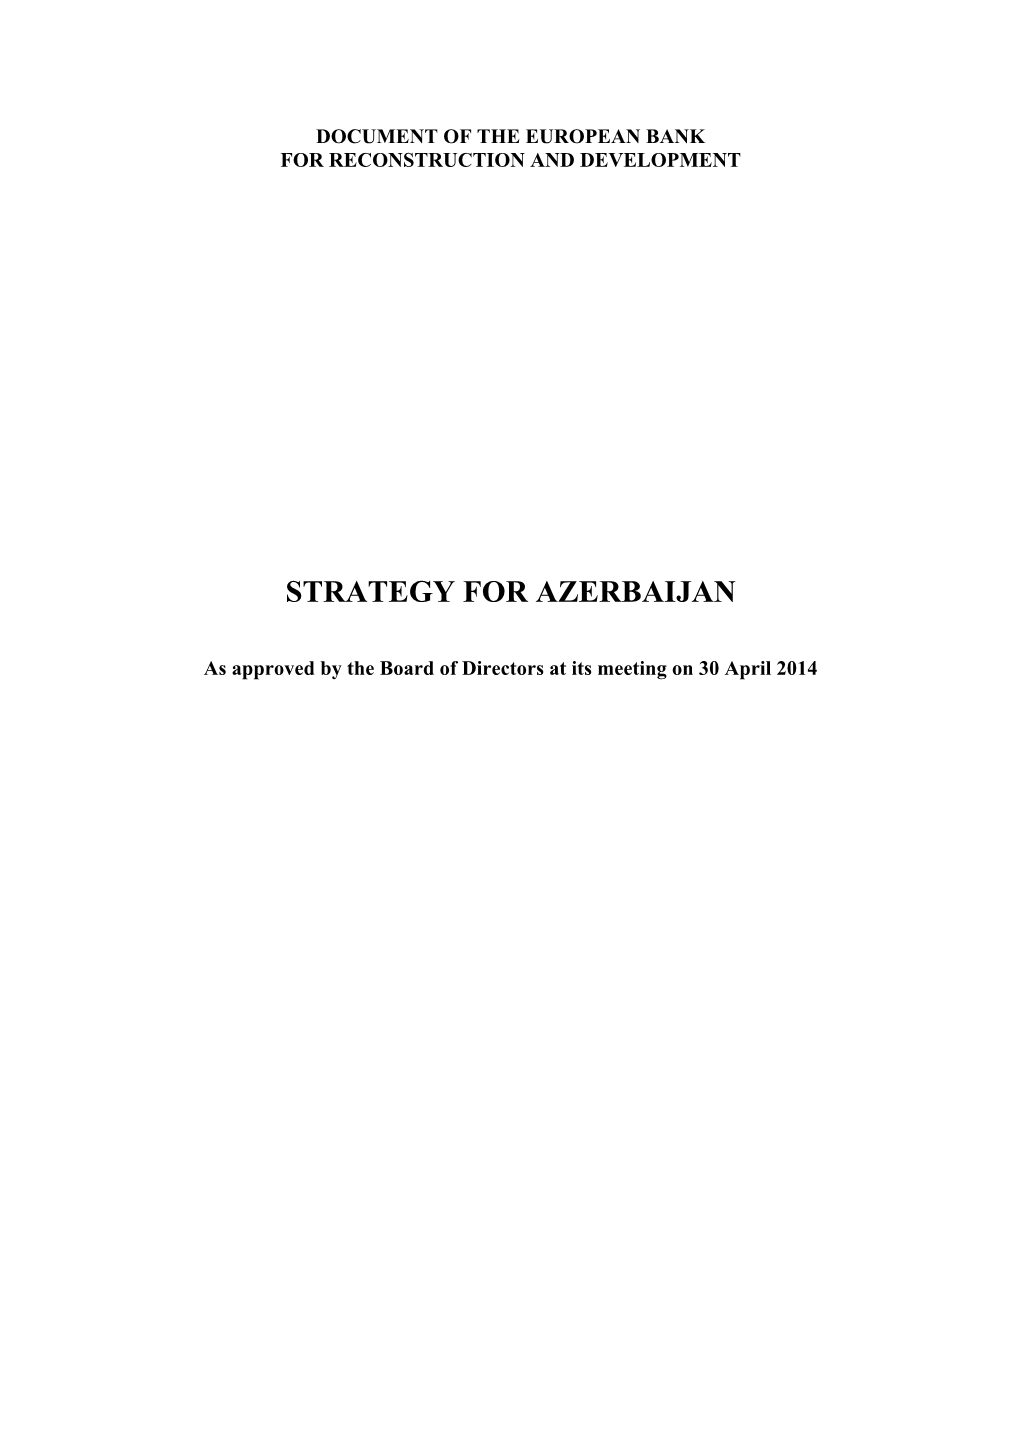 Country Strategy for Azerbaijan